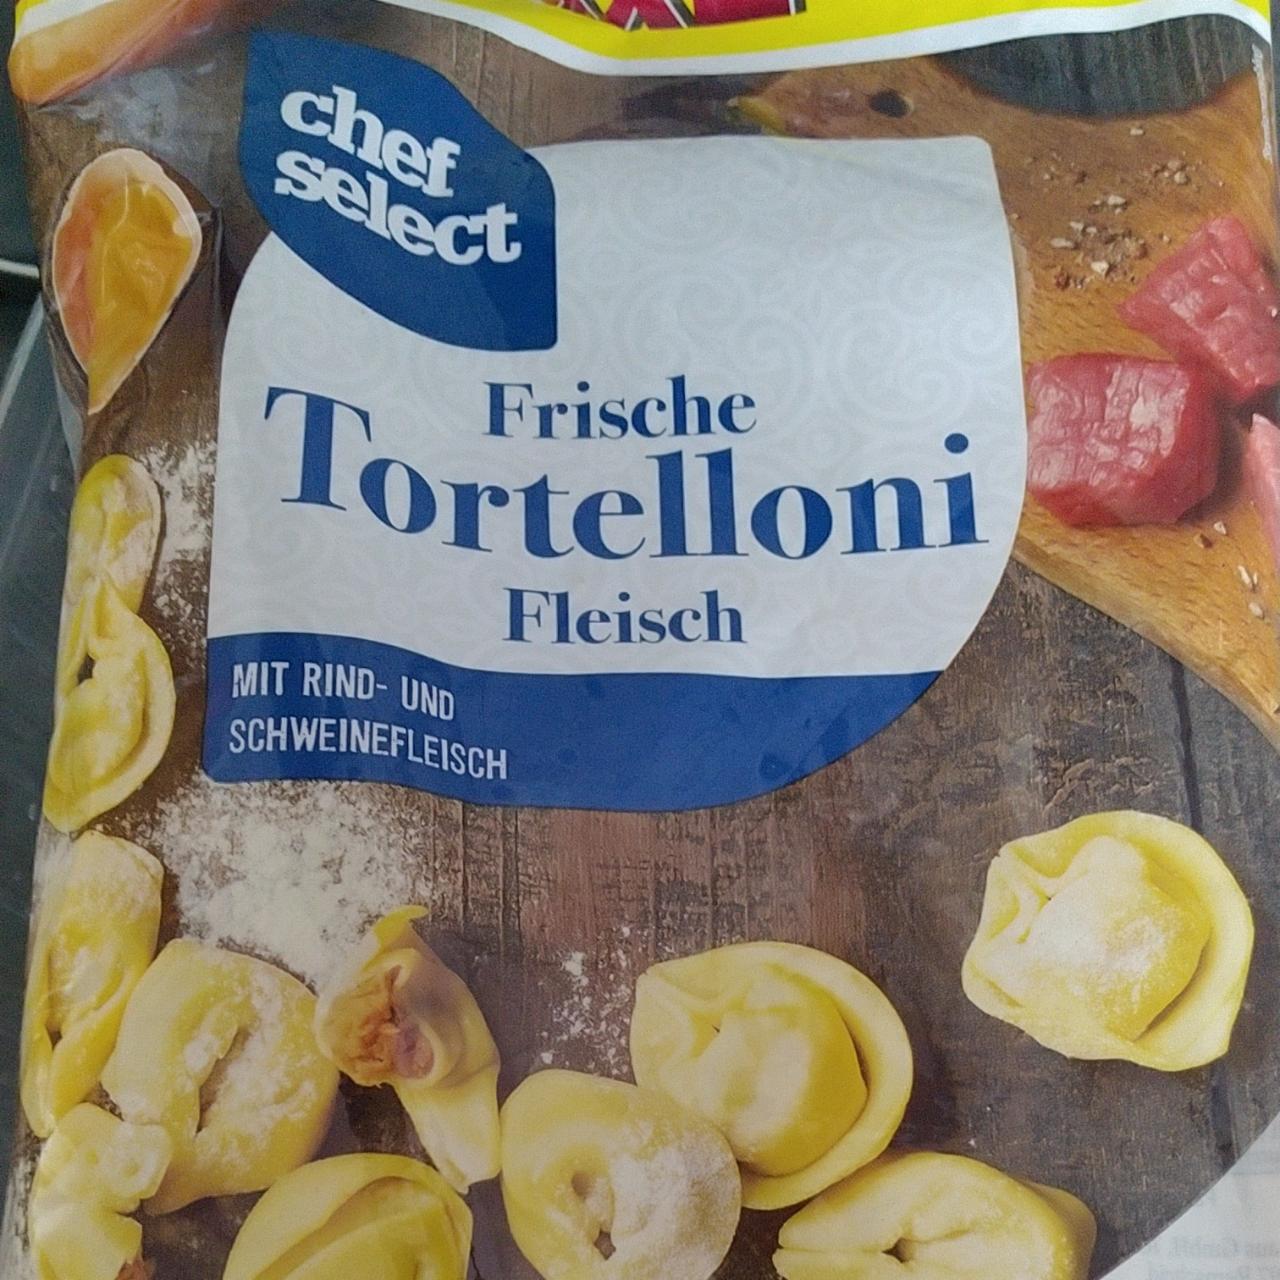 Фото - Tortelloni fleisch Chef select